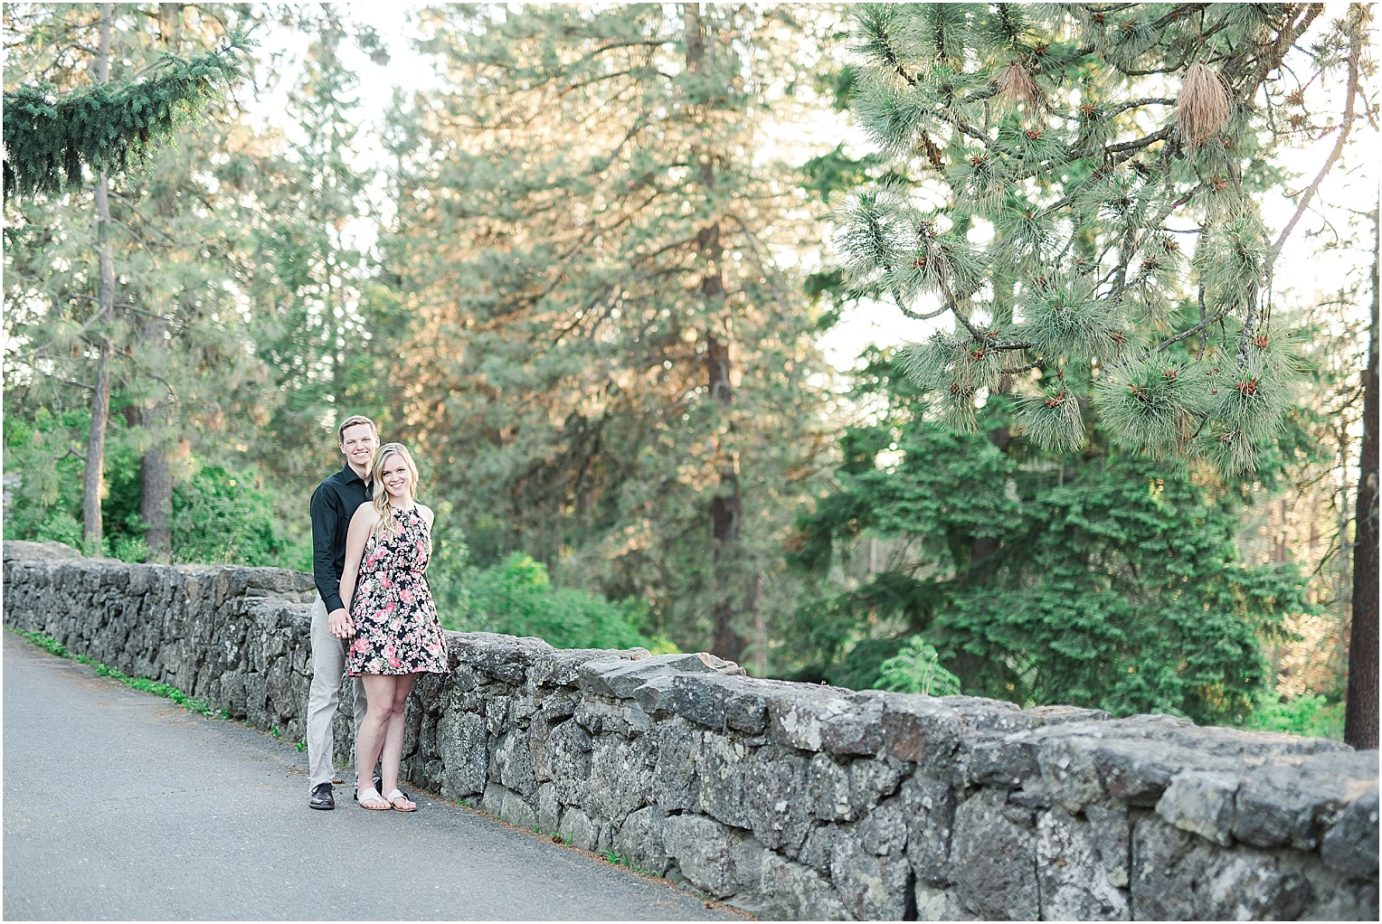 Manito Park Engagement Session Spokane Photographer Bryan and Olivia on stone bridge